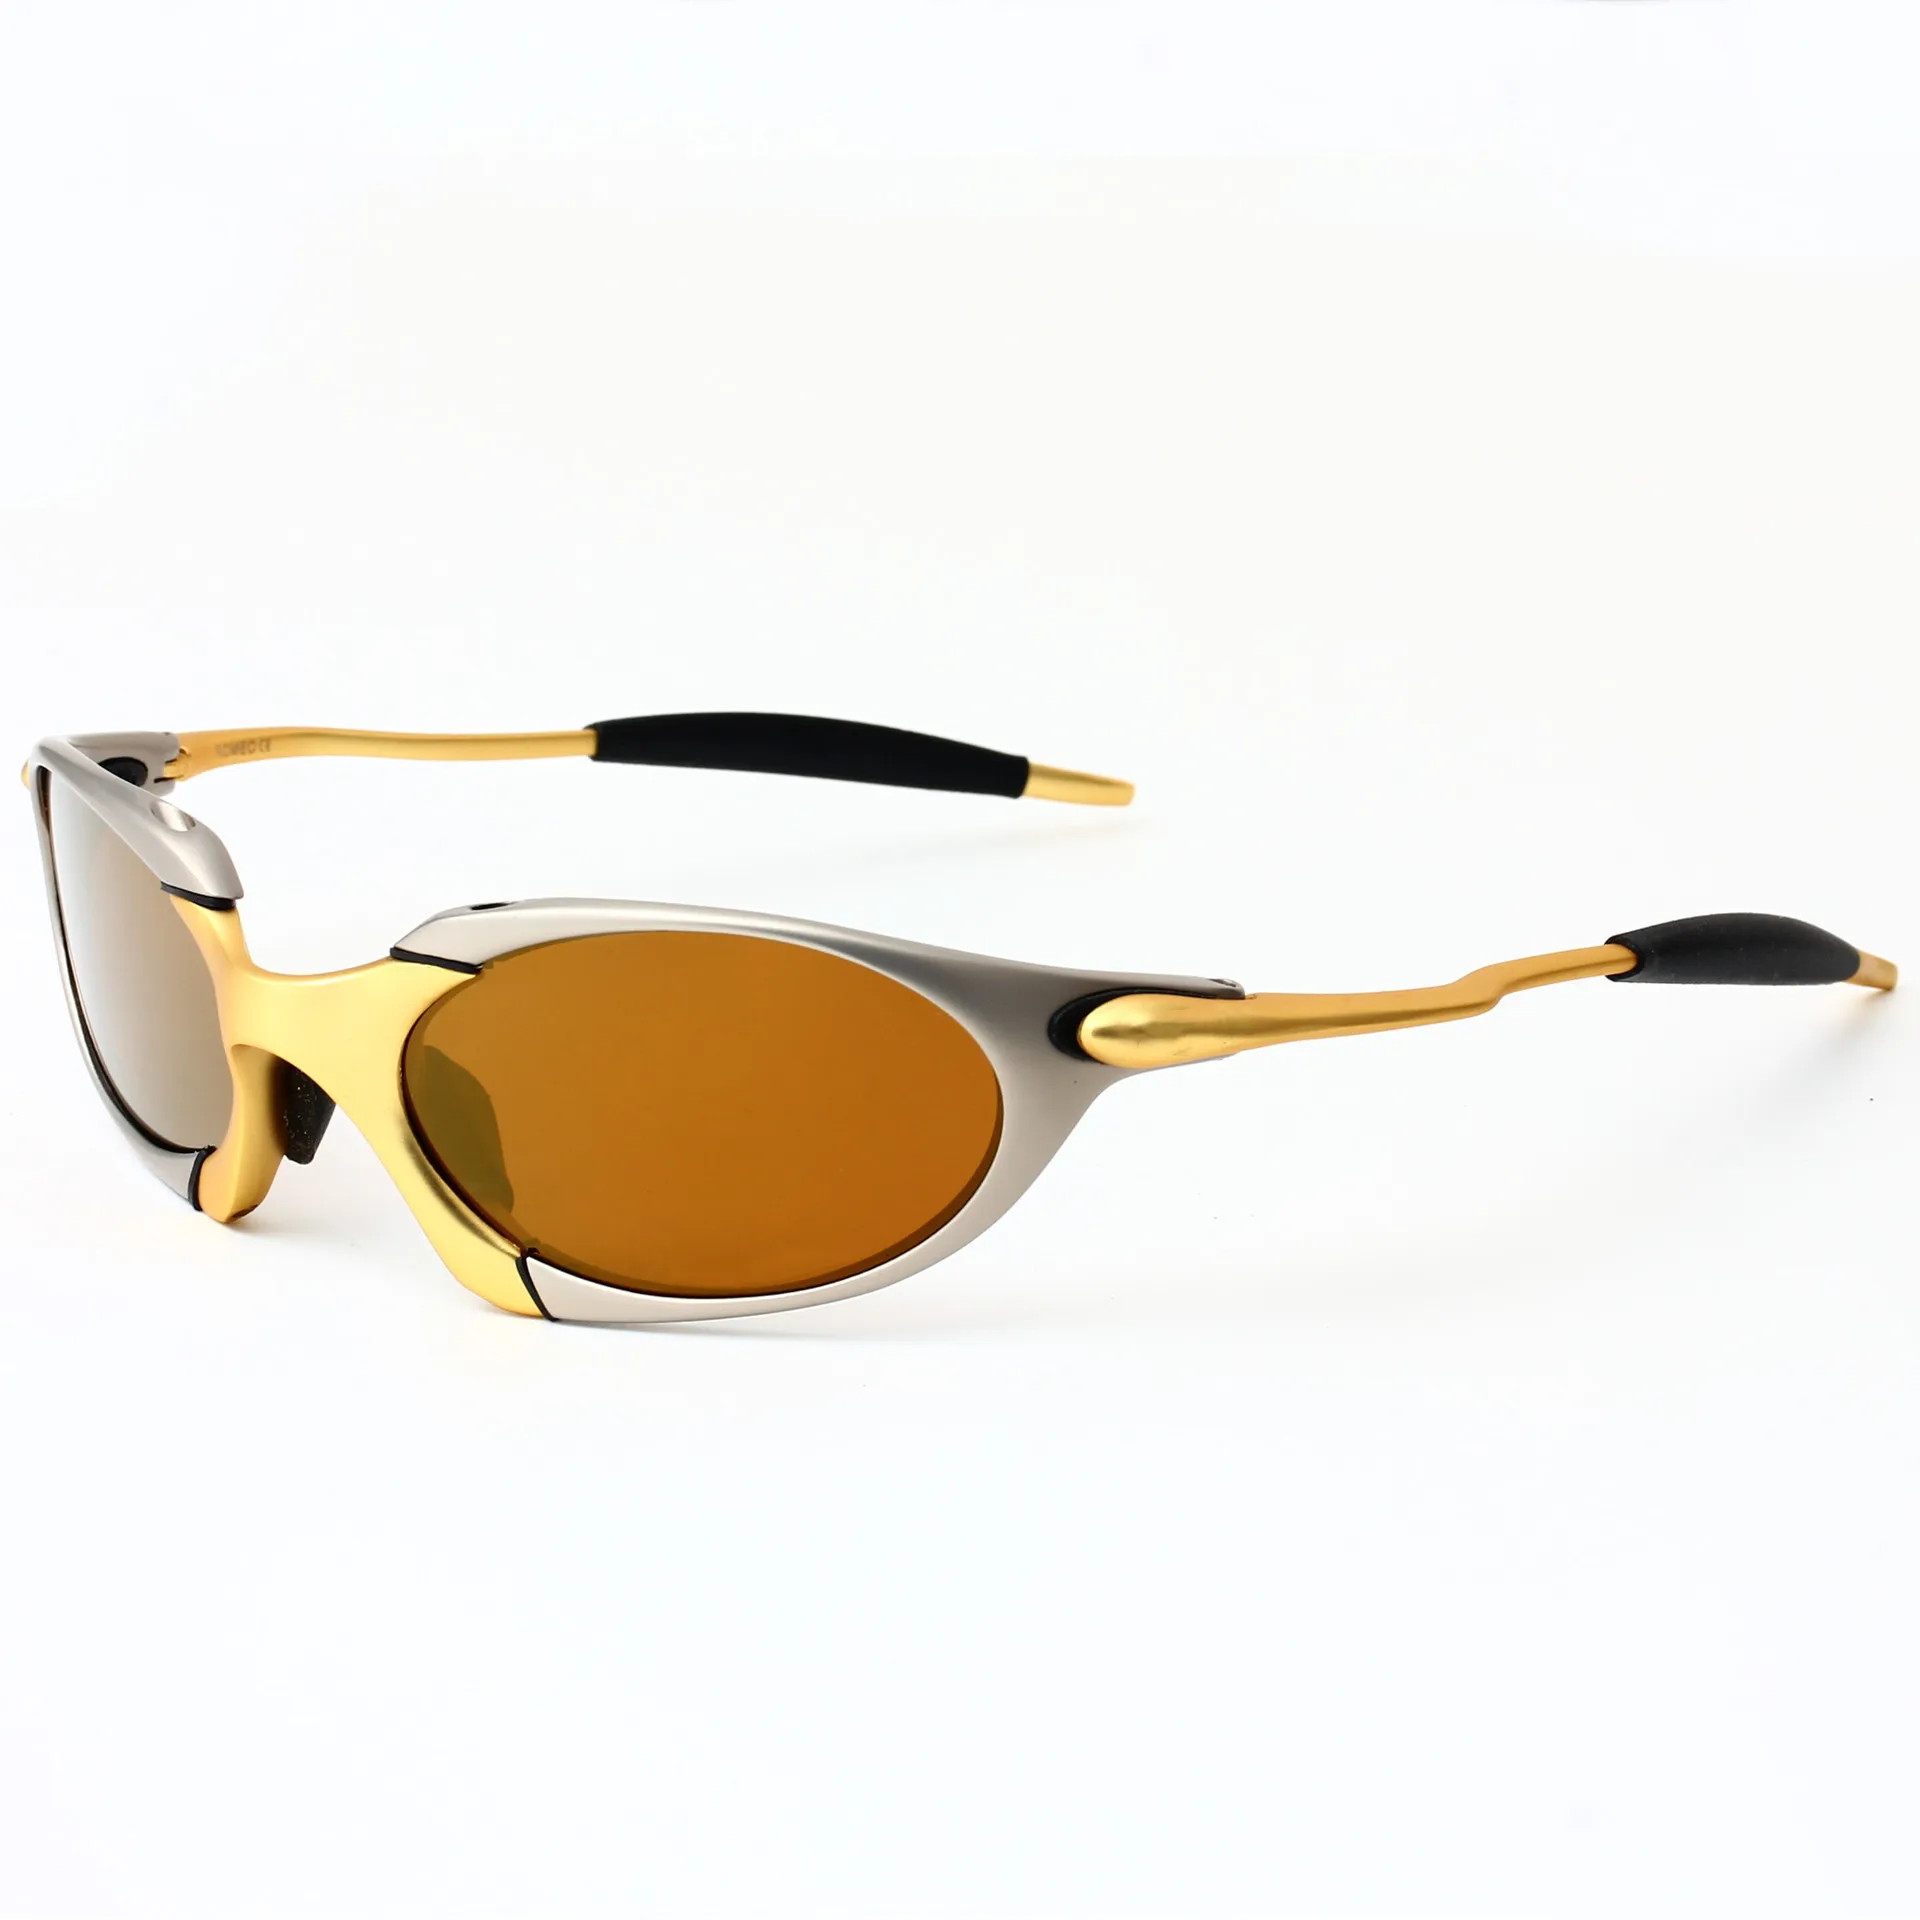 

Y2K Men's Metal Polarized Sunglasses Fashion Men's Future Technology Sense Outdoor Driving Riding Goggles Sea Fishing Sunglasses